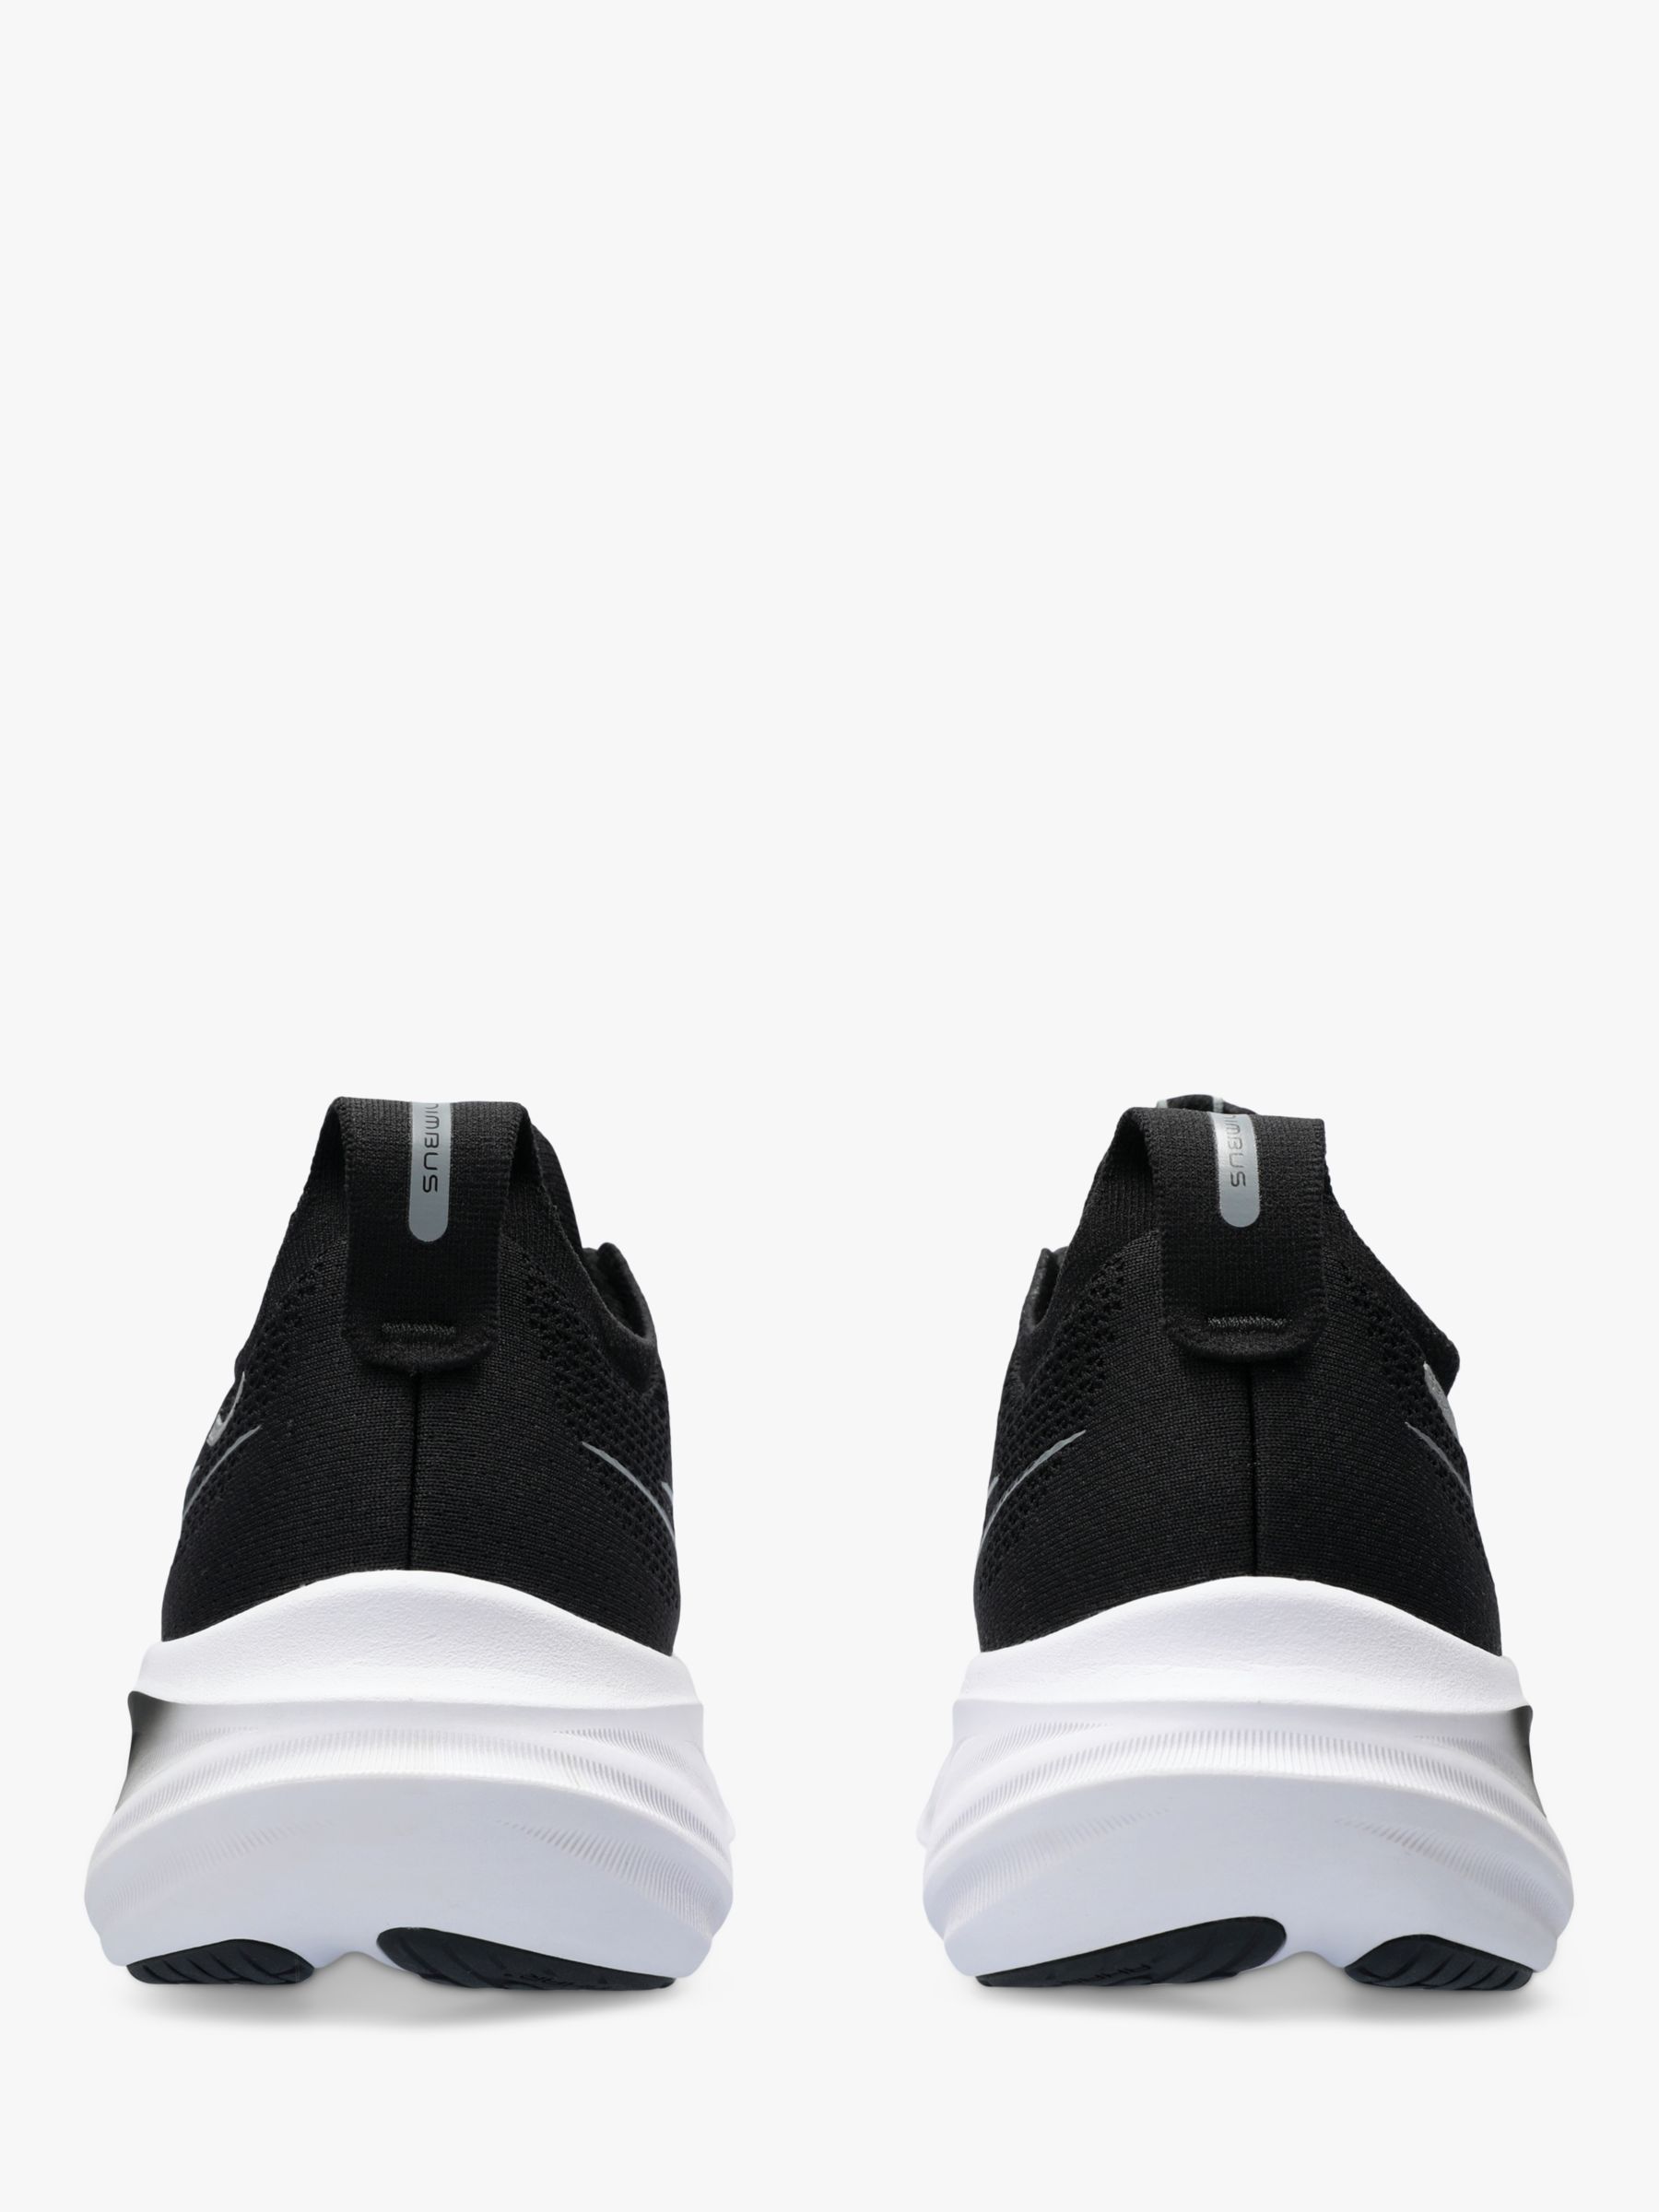 ASICS GEL-NIMBUS 26 Men's Running Shoes, Black/Graphite Grey, 10.5